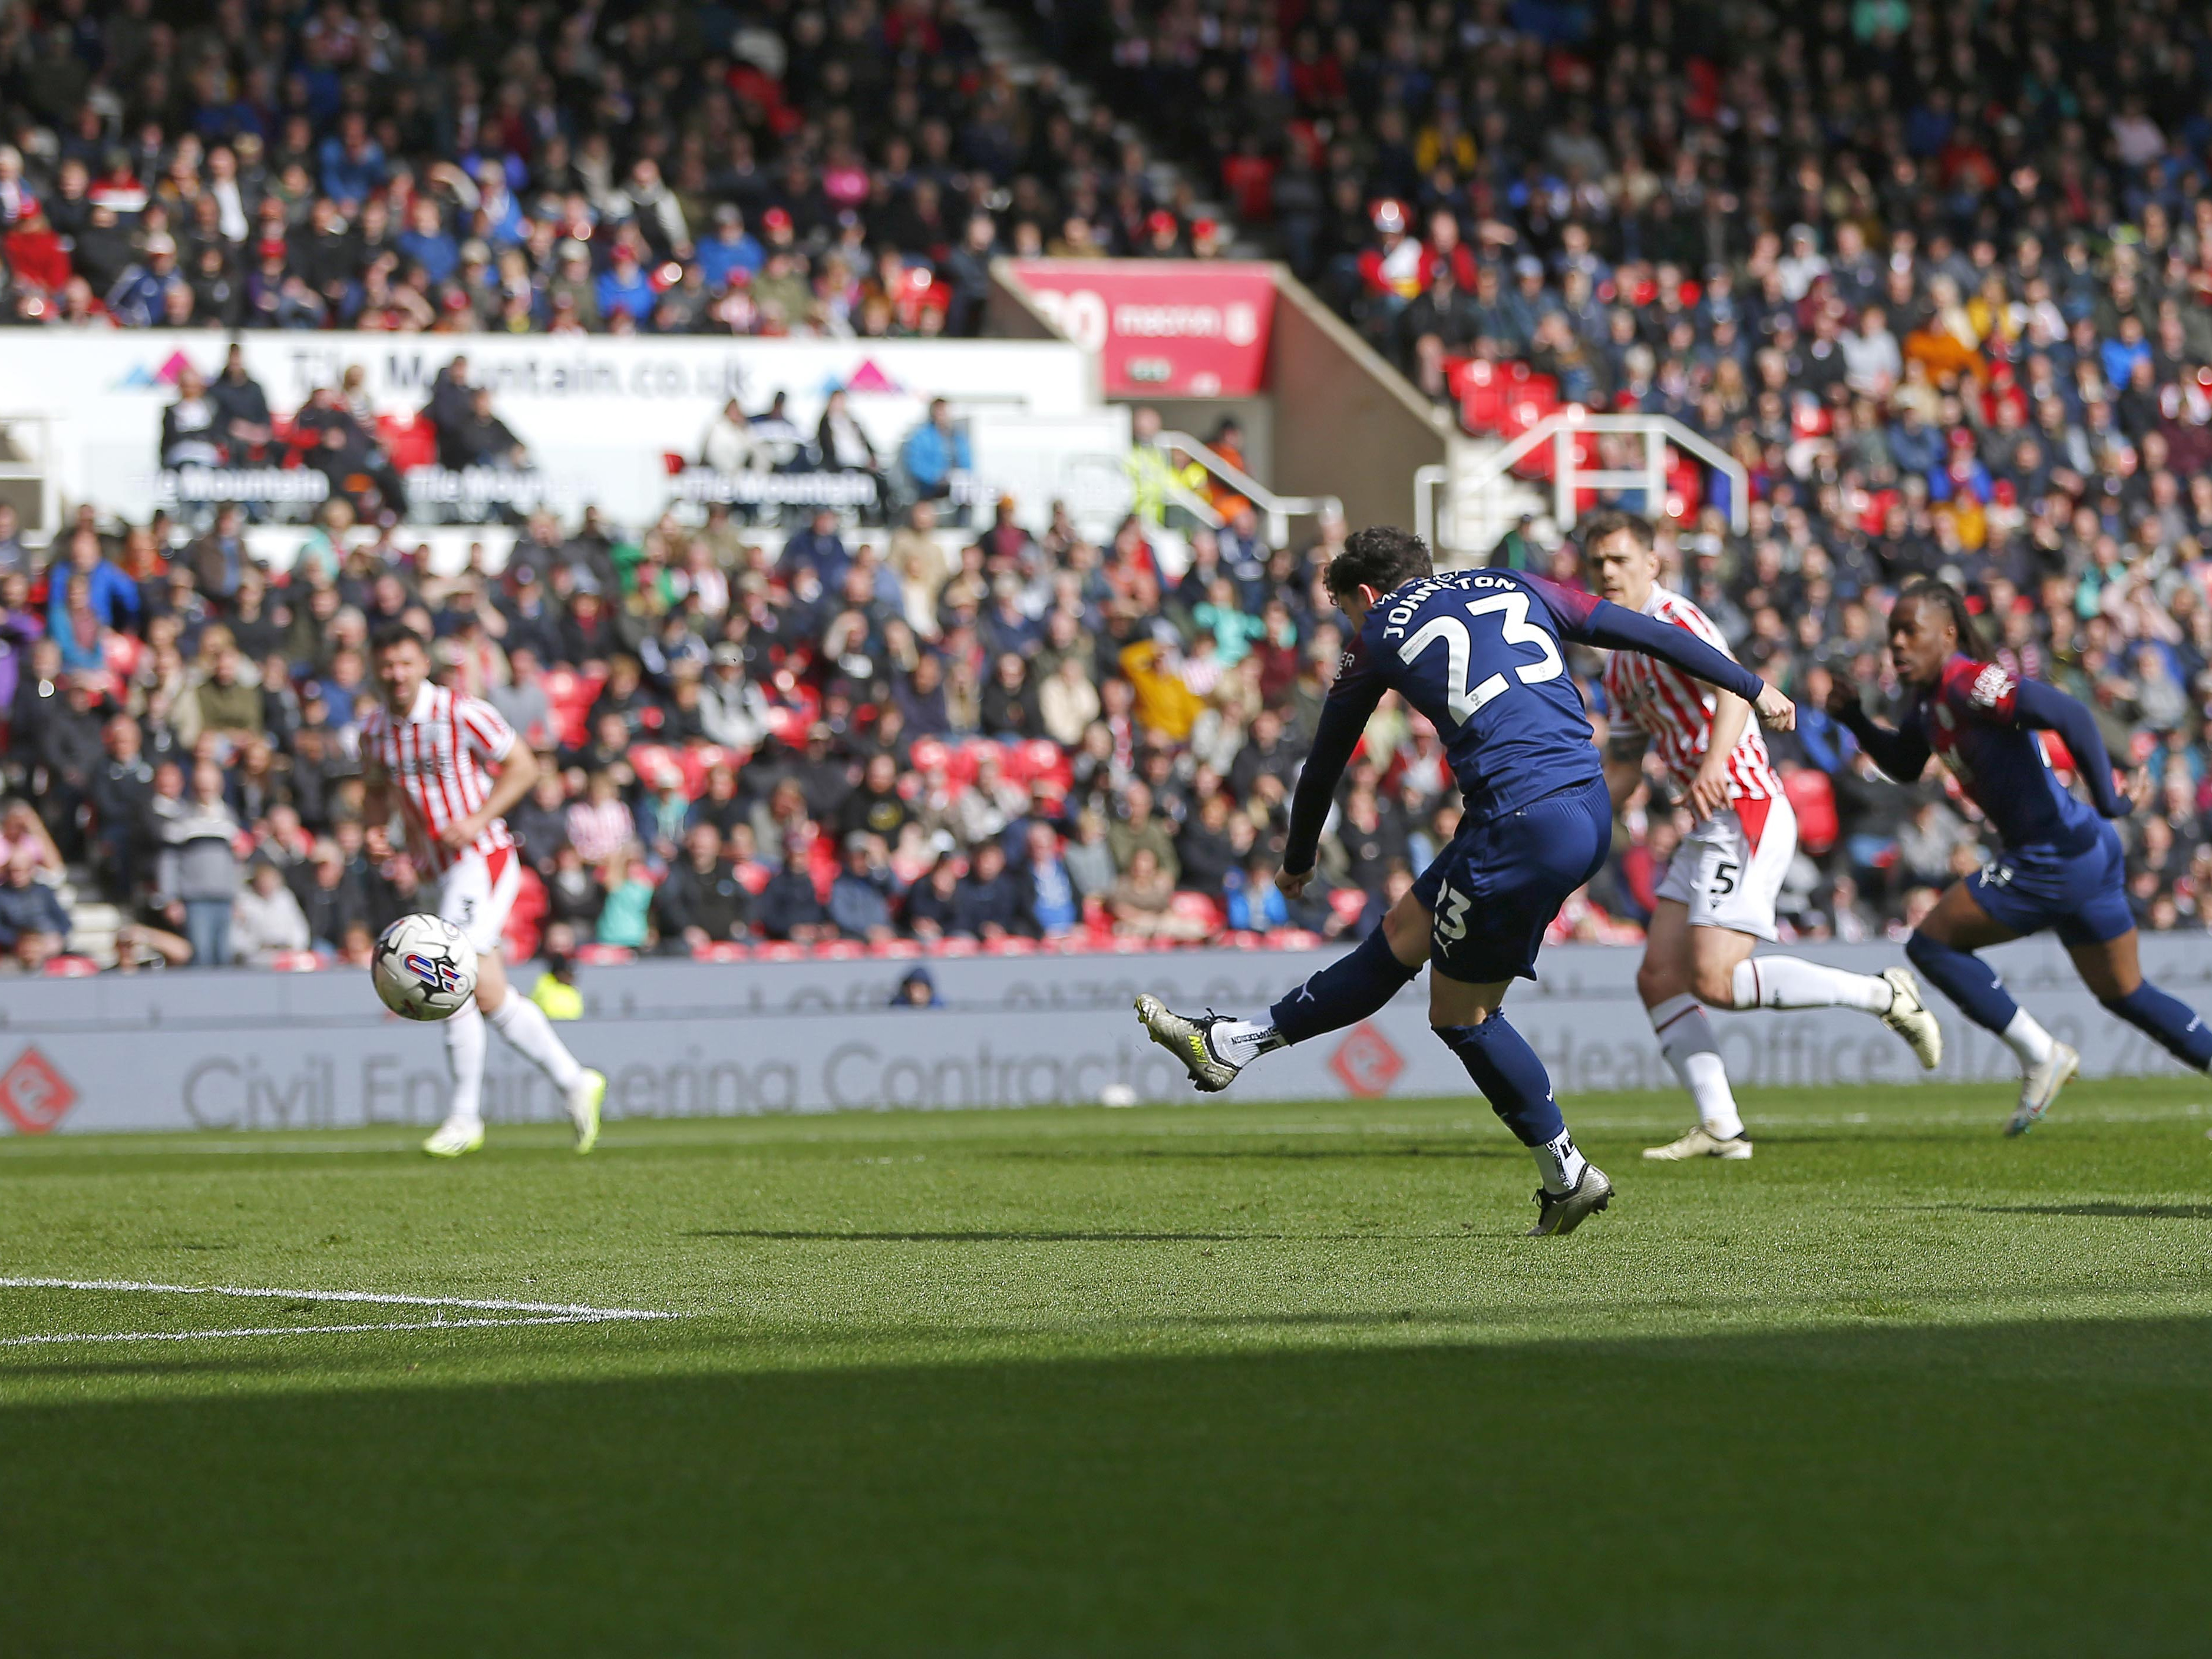 An image of Mikey Johnston scoring against Stoke